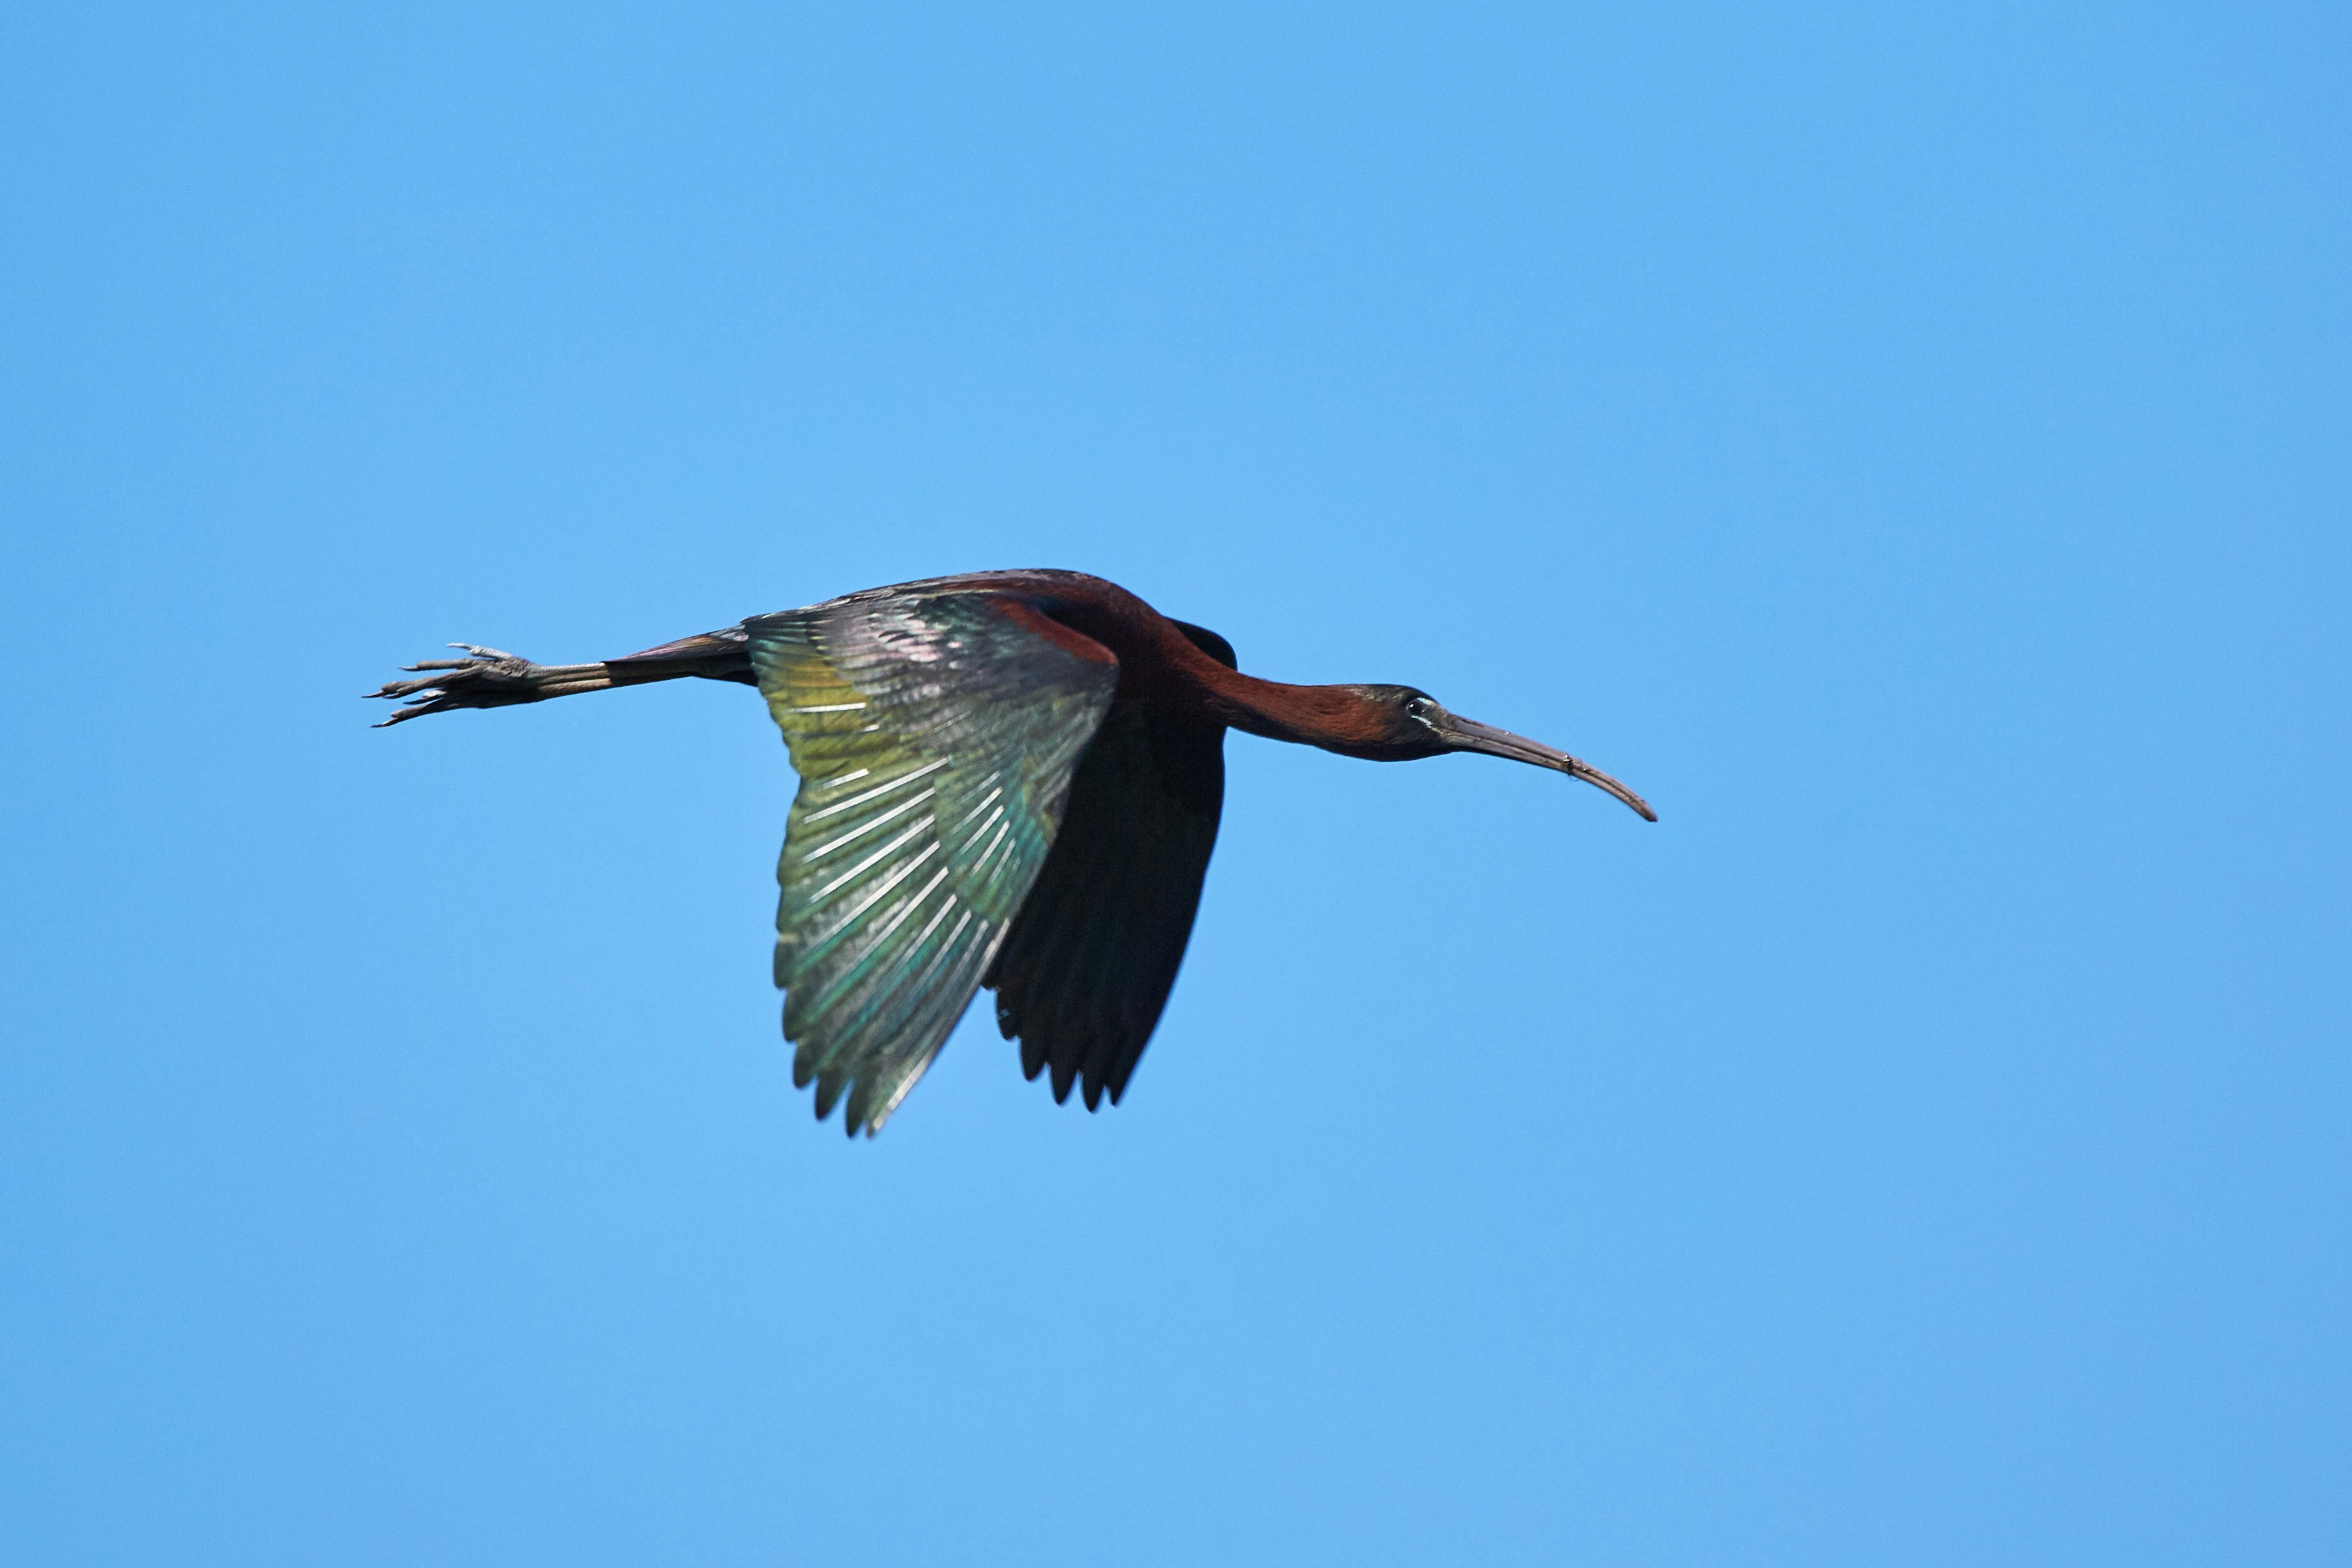 red and green long beak bird flying during daytime